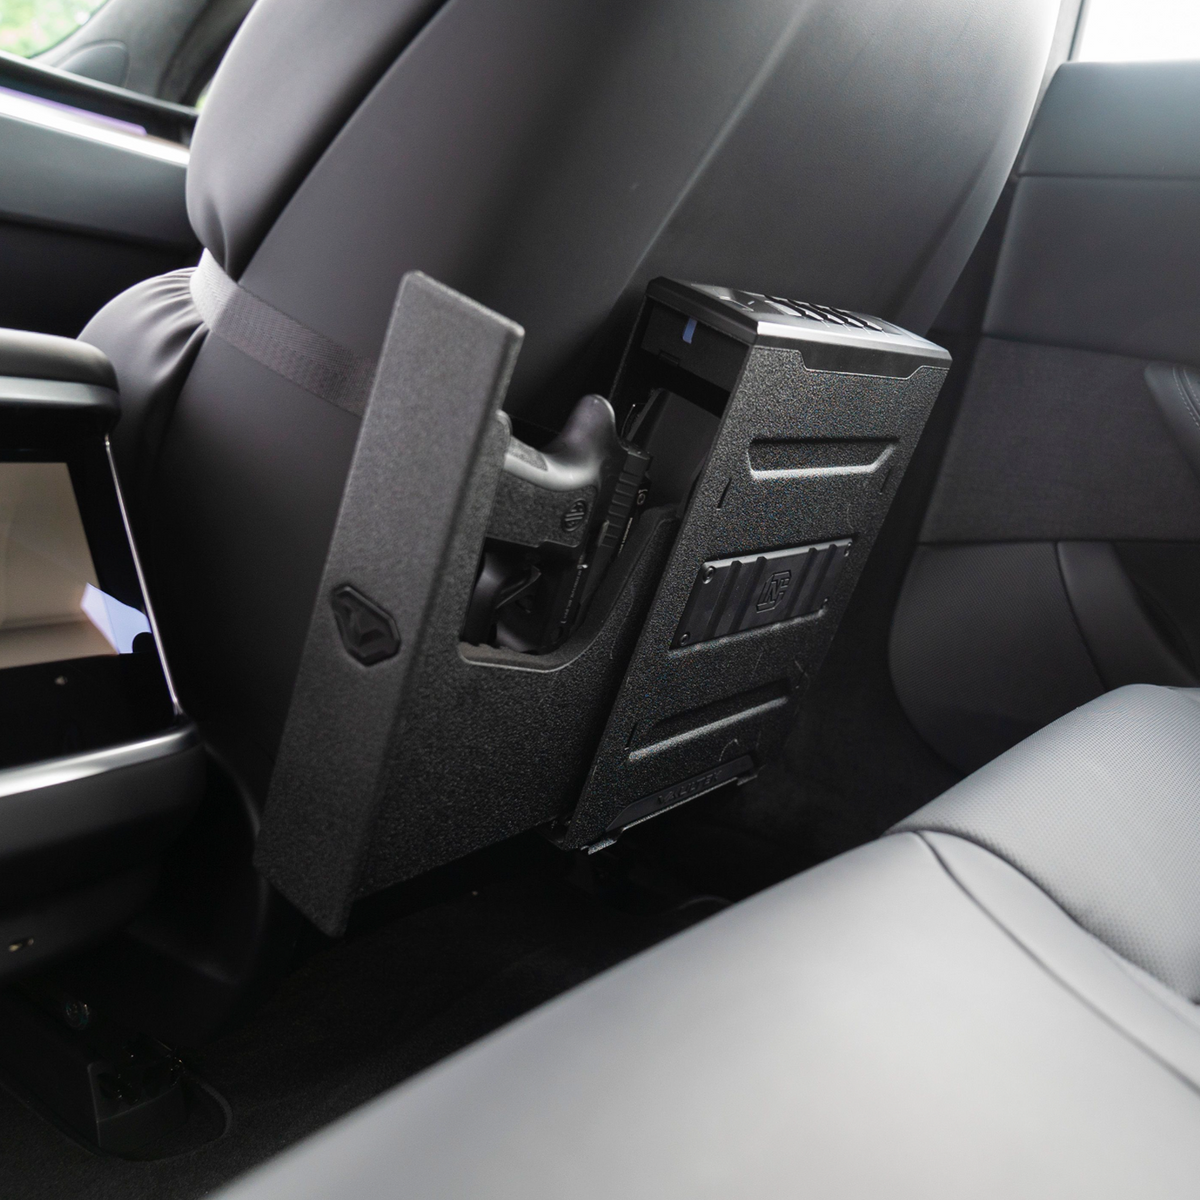 Vaultek SR20i Colion Noir Edition Biometric &amp; Bluetooth 2.0 Slider Handgun Safe Mounted behind seat